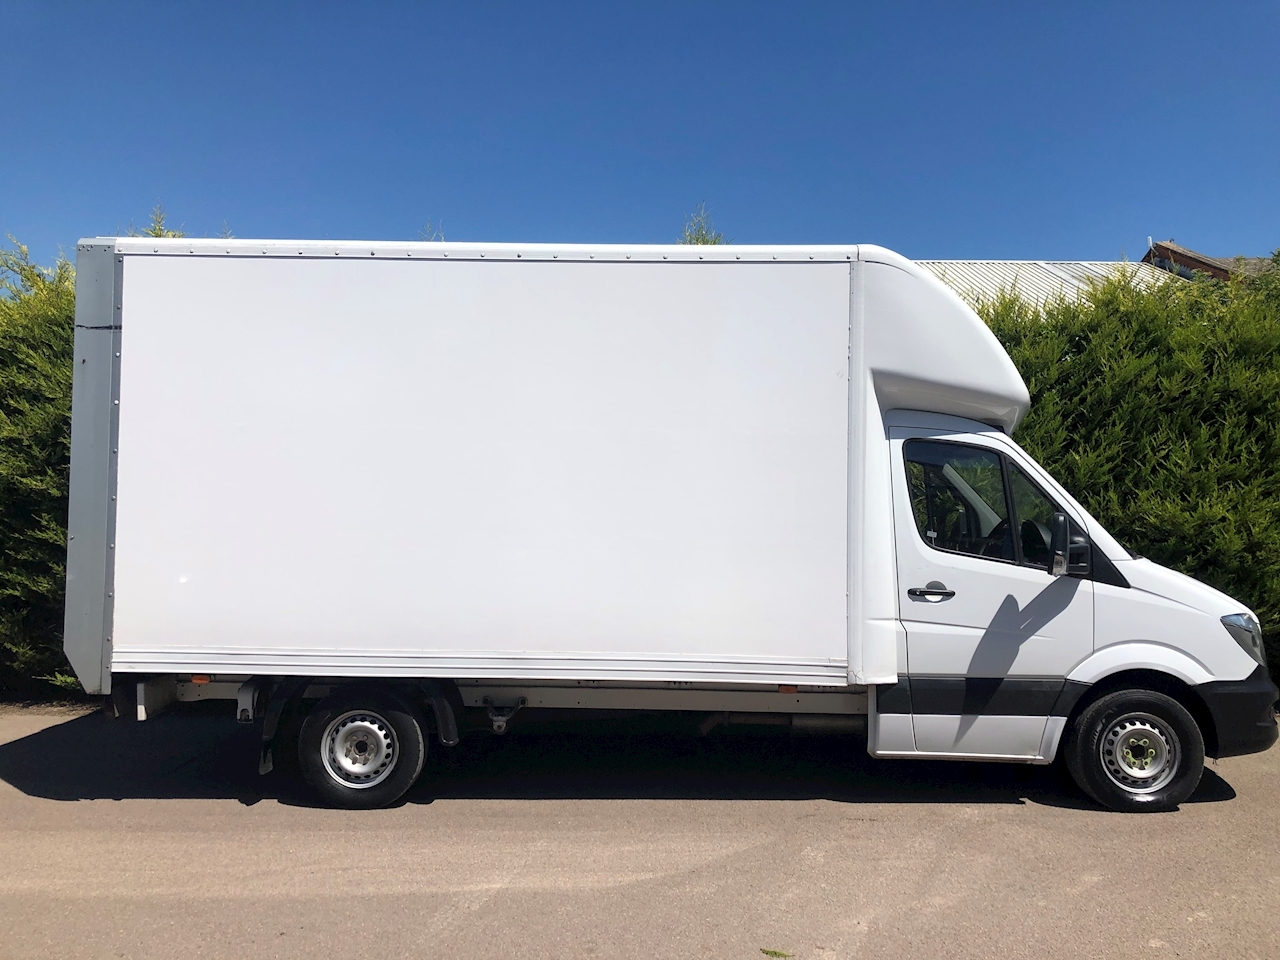 large luton van for sale